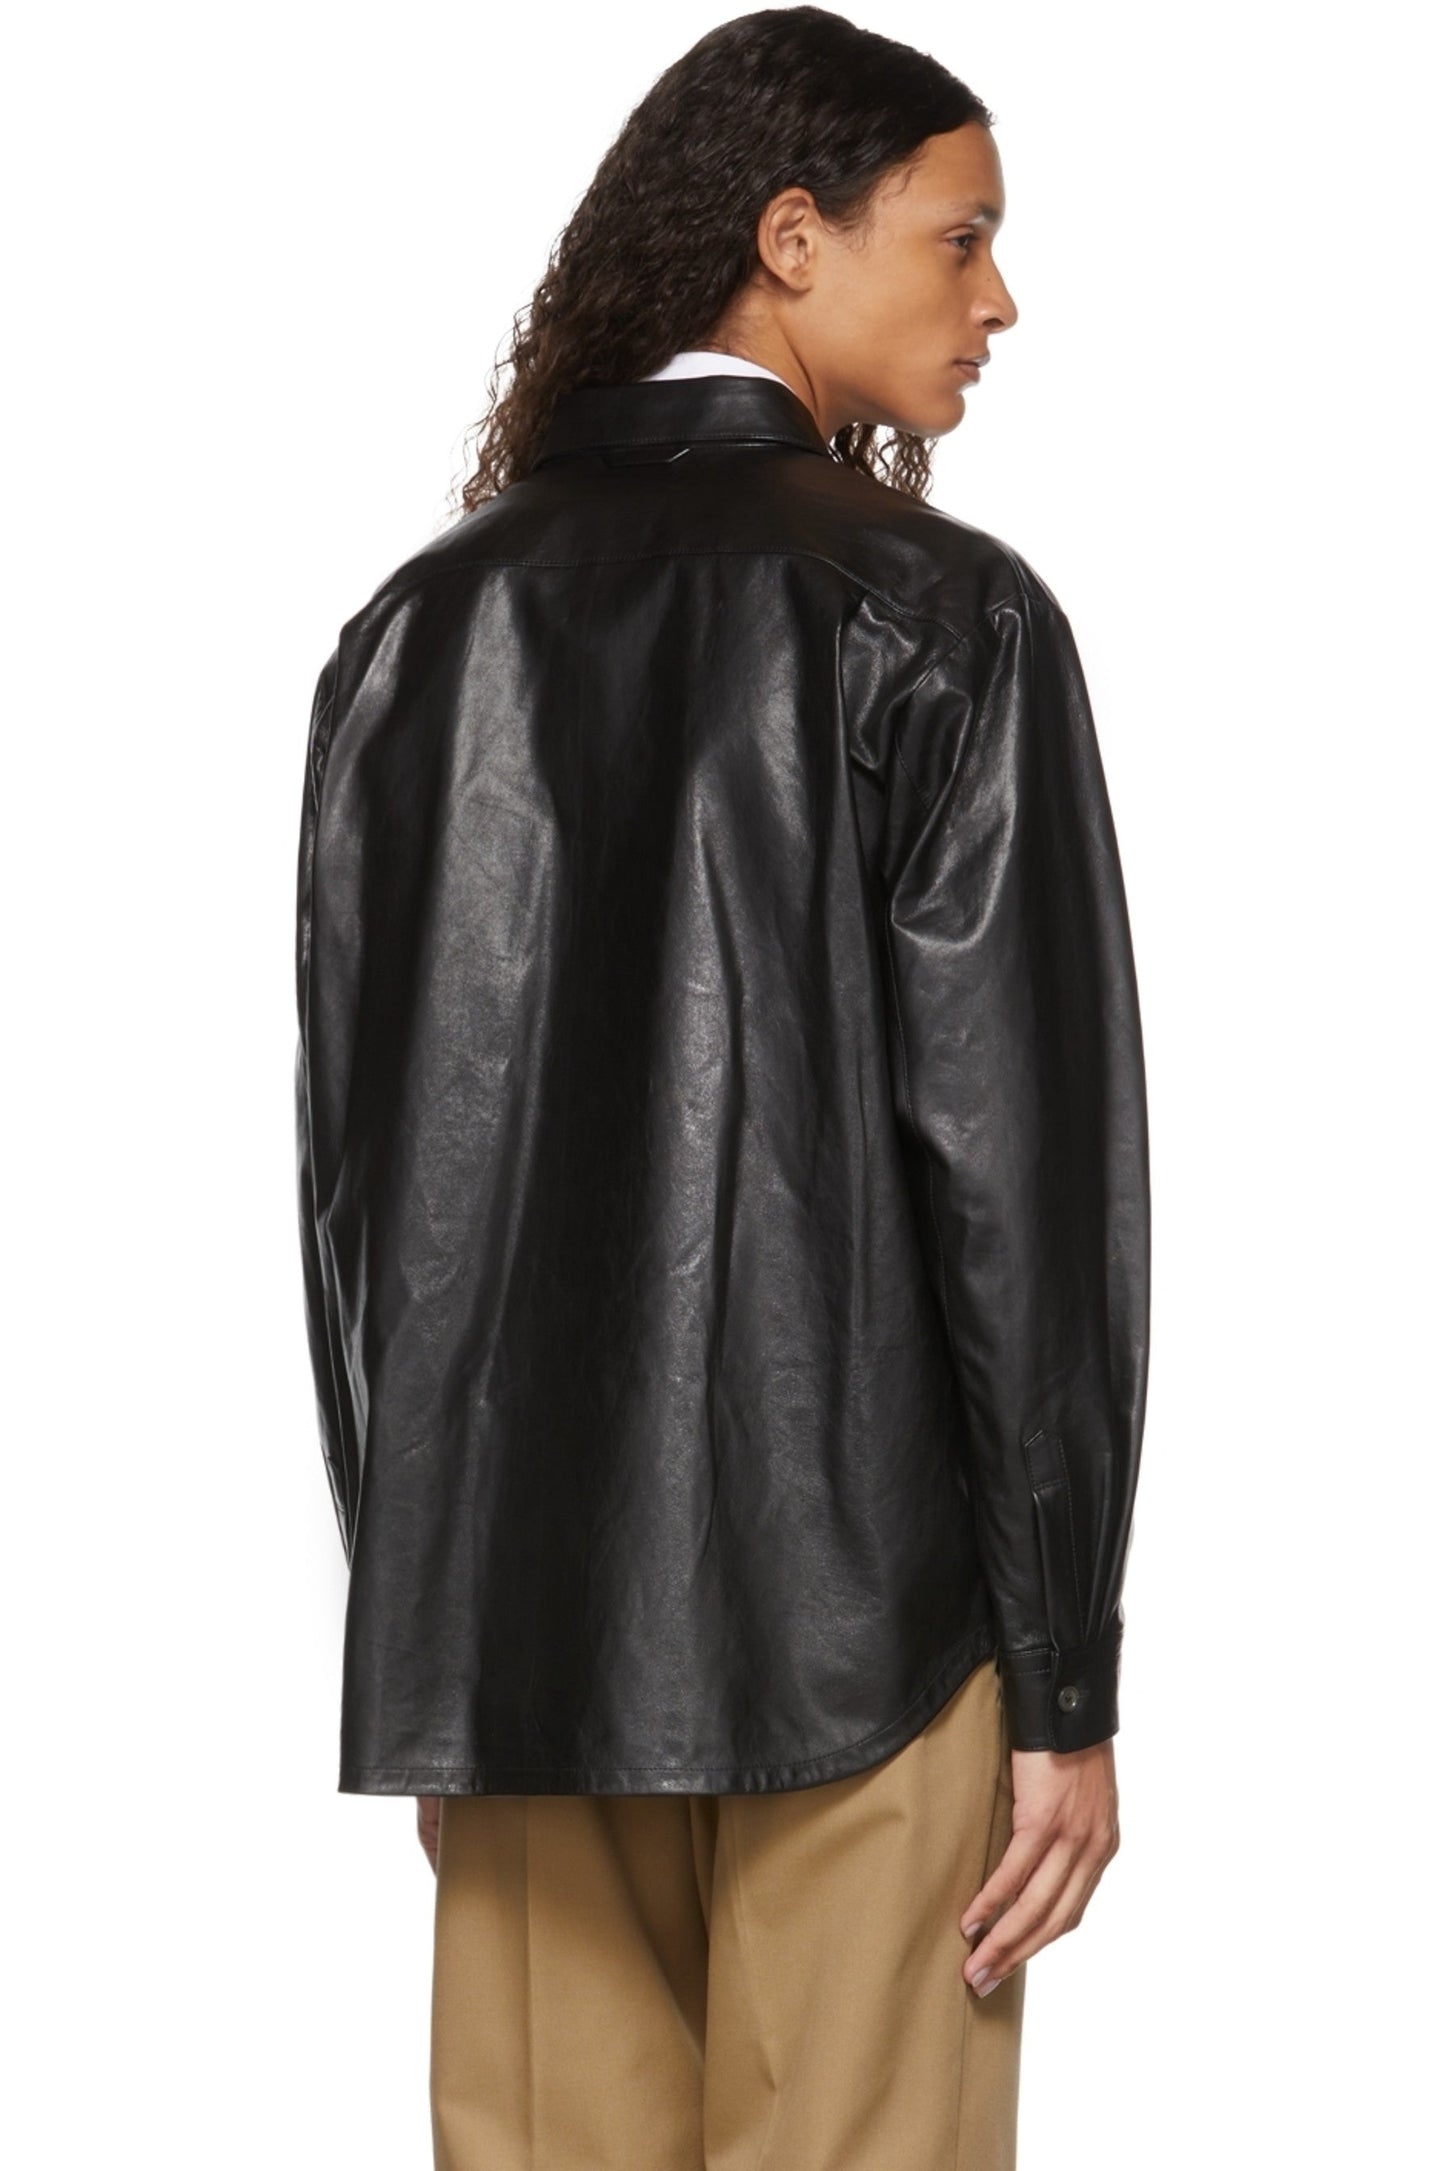 Men’s Black Leather Shirt Trendy Design